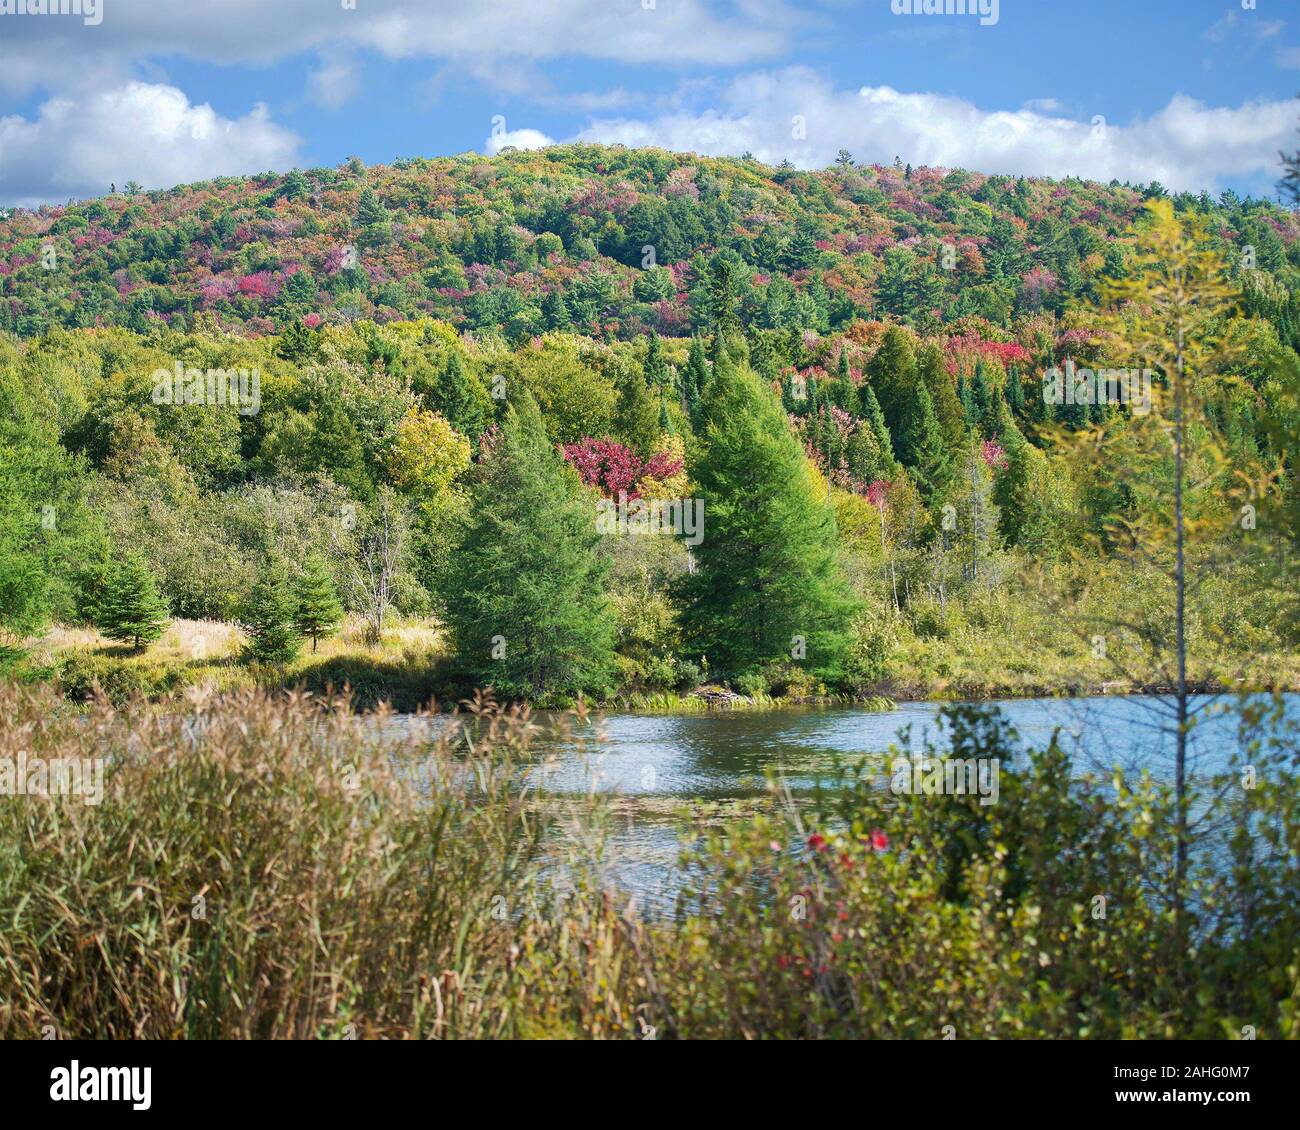 Autumn scenery landscape showing colorful nature scene. Stock Photo